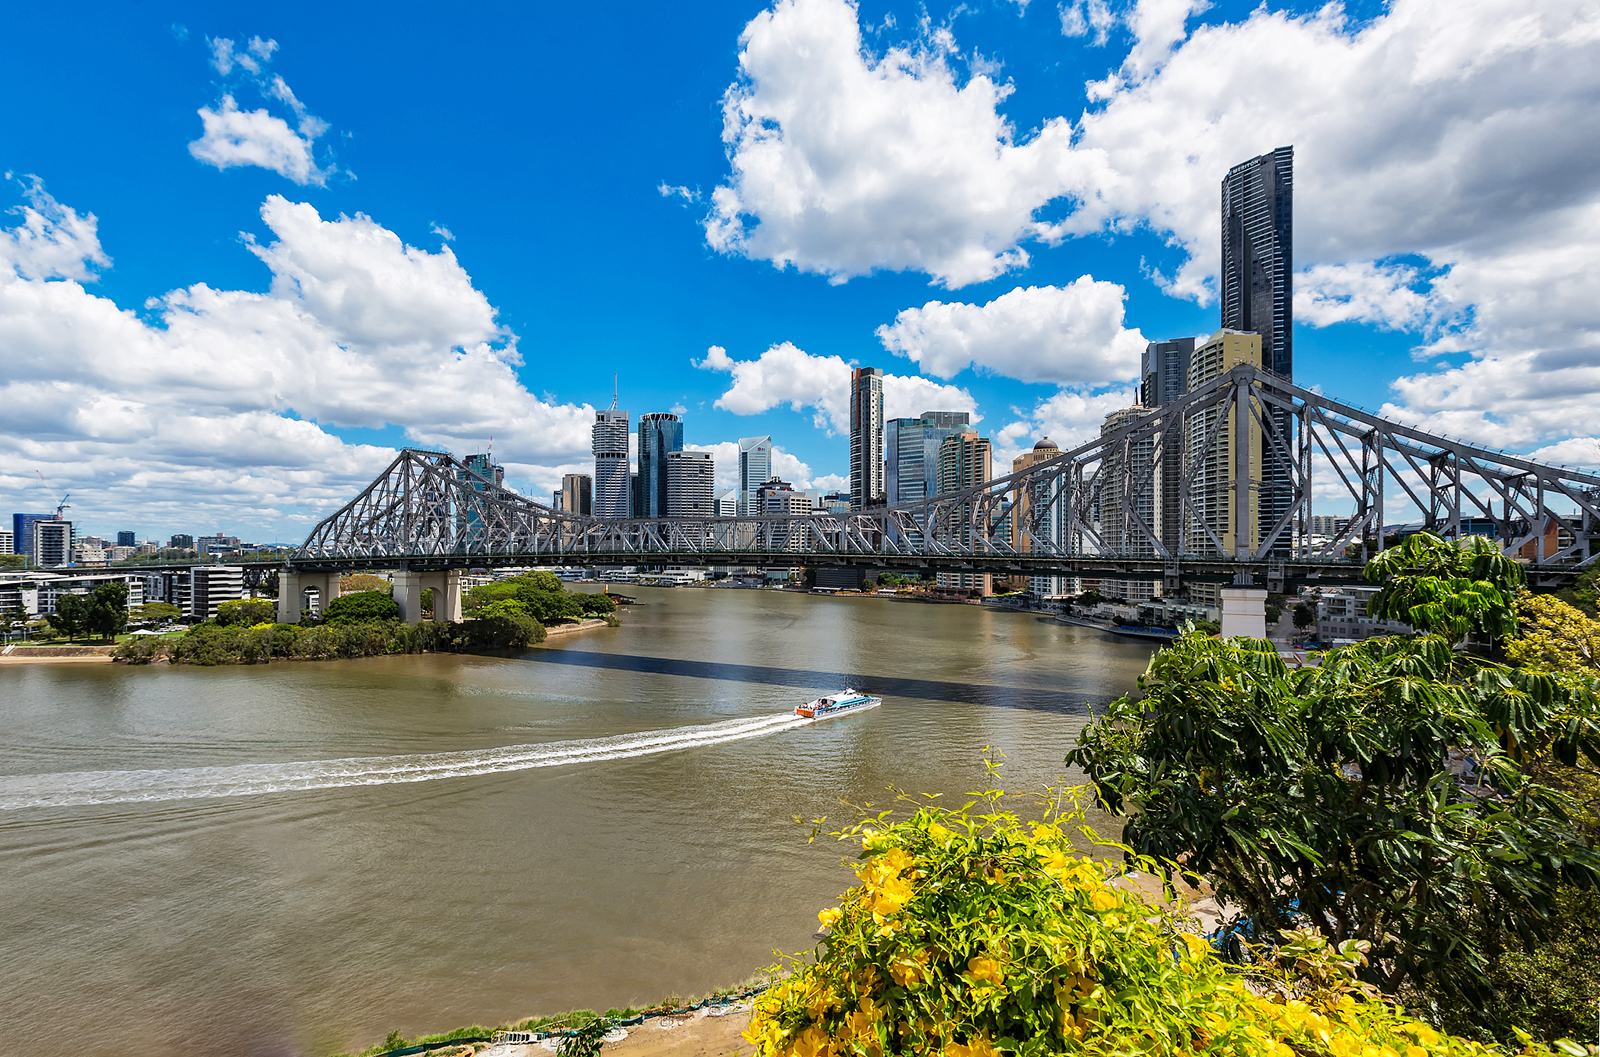 A view of Brisbane, Australia, with its famous Story Bridge. /CFP